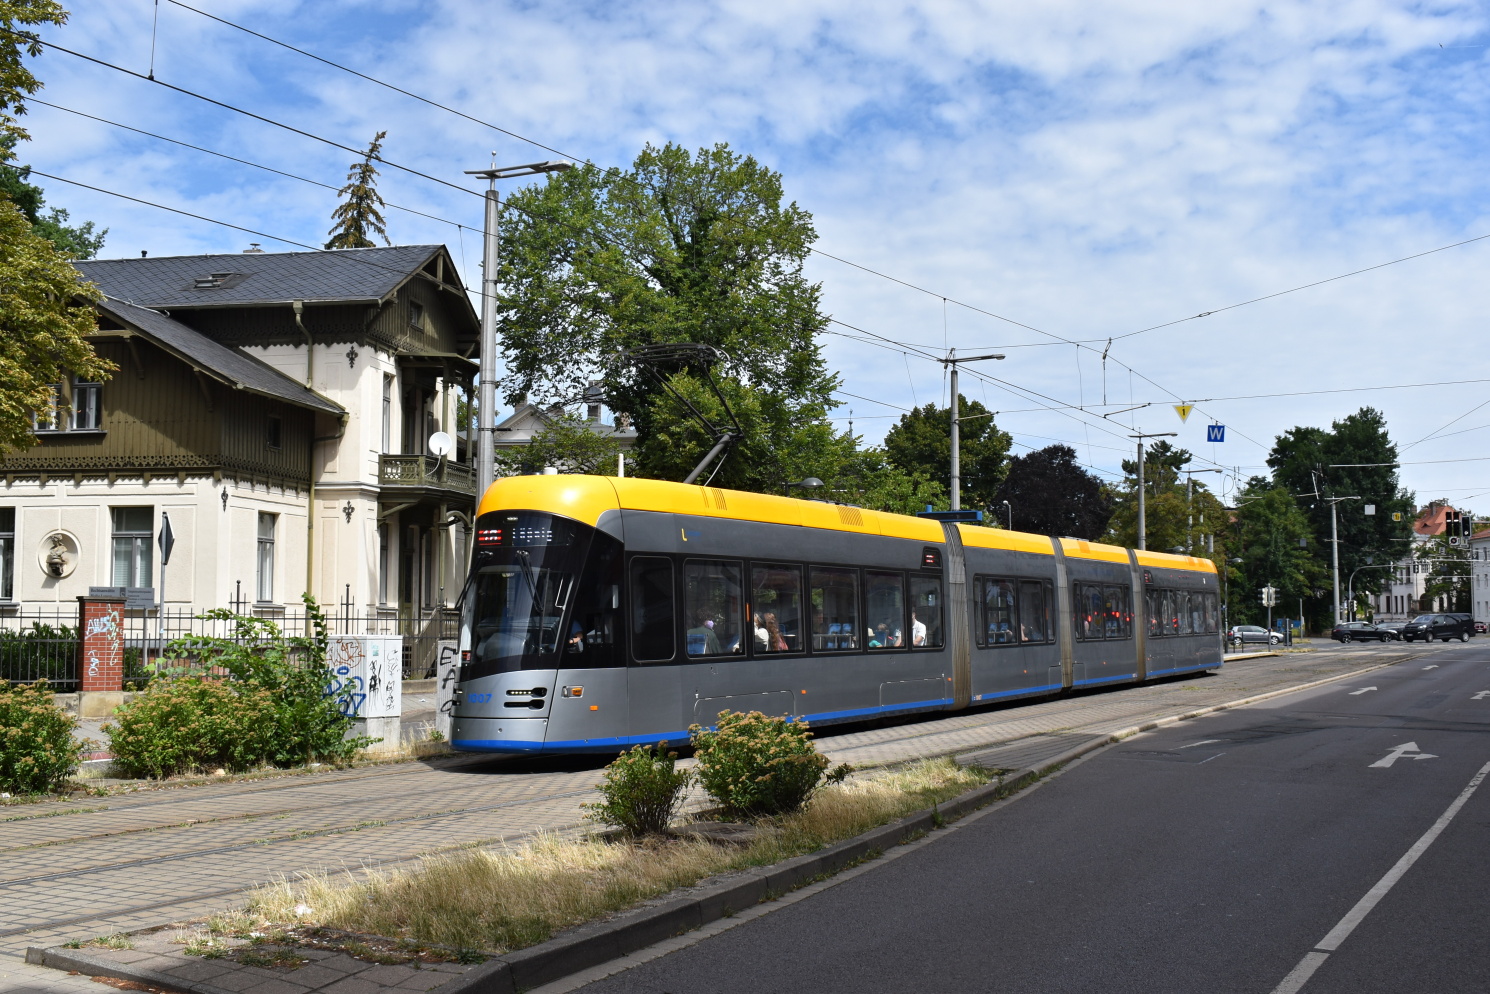 Лейпциг, Solaris Tramino Leipzig (NGT10) № 1007